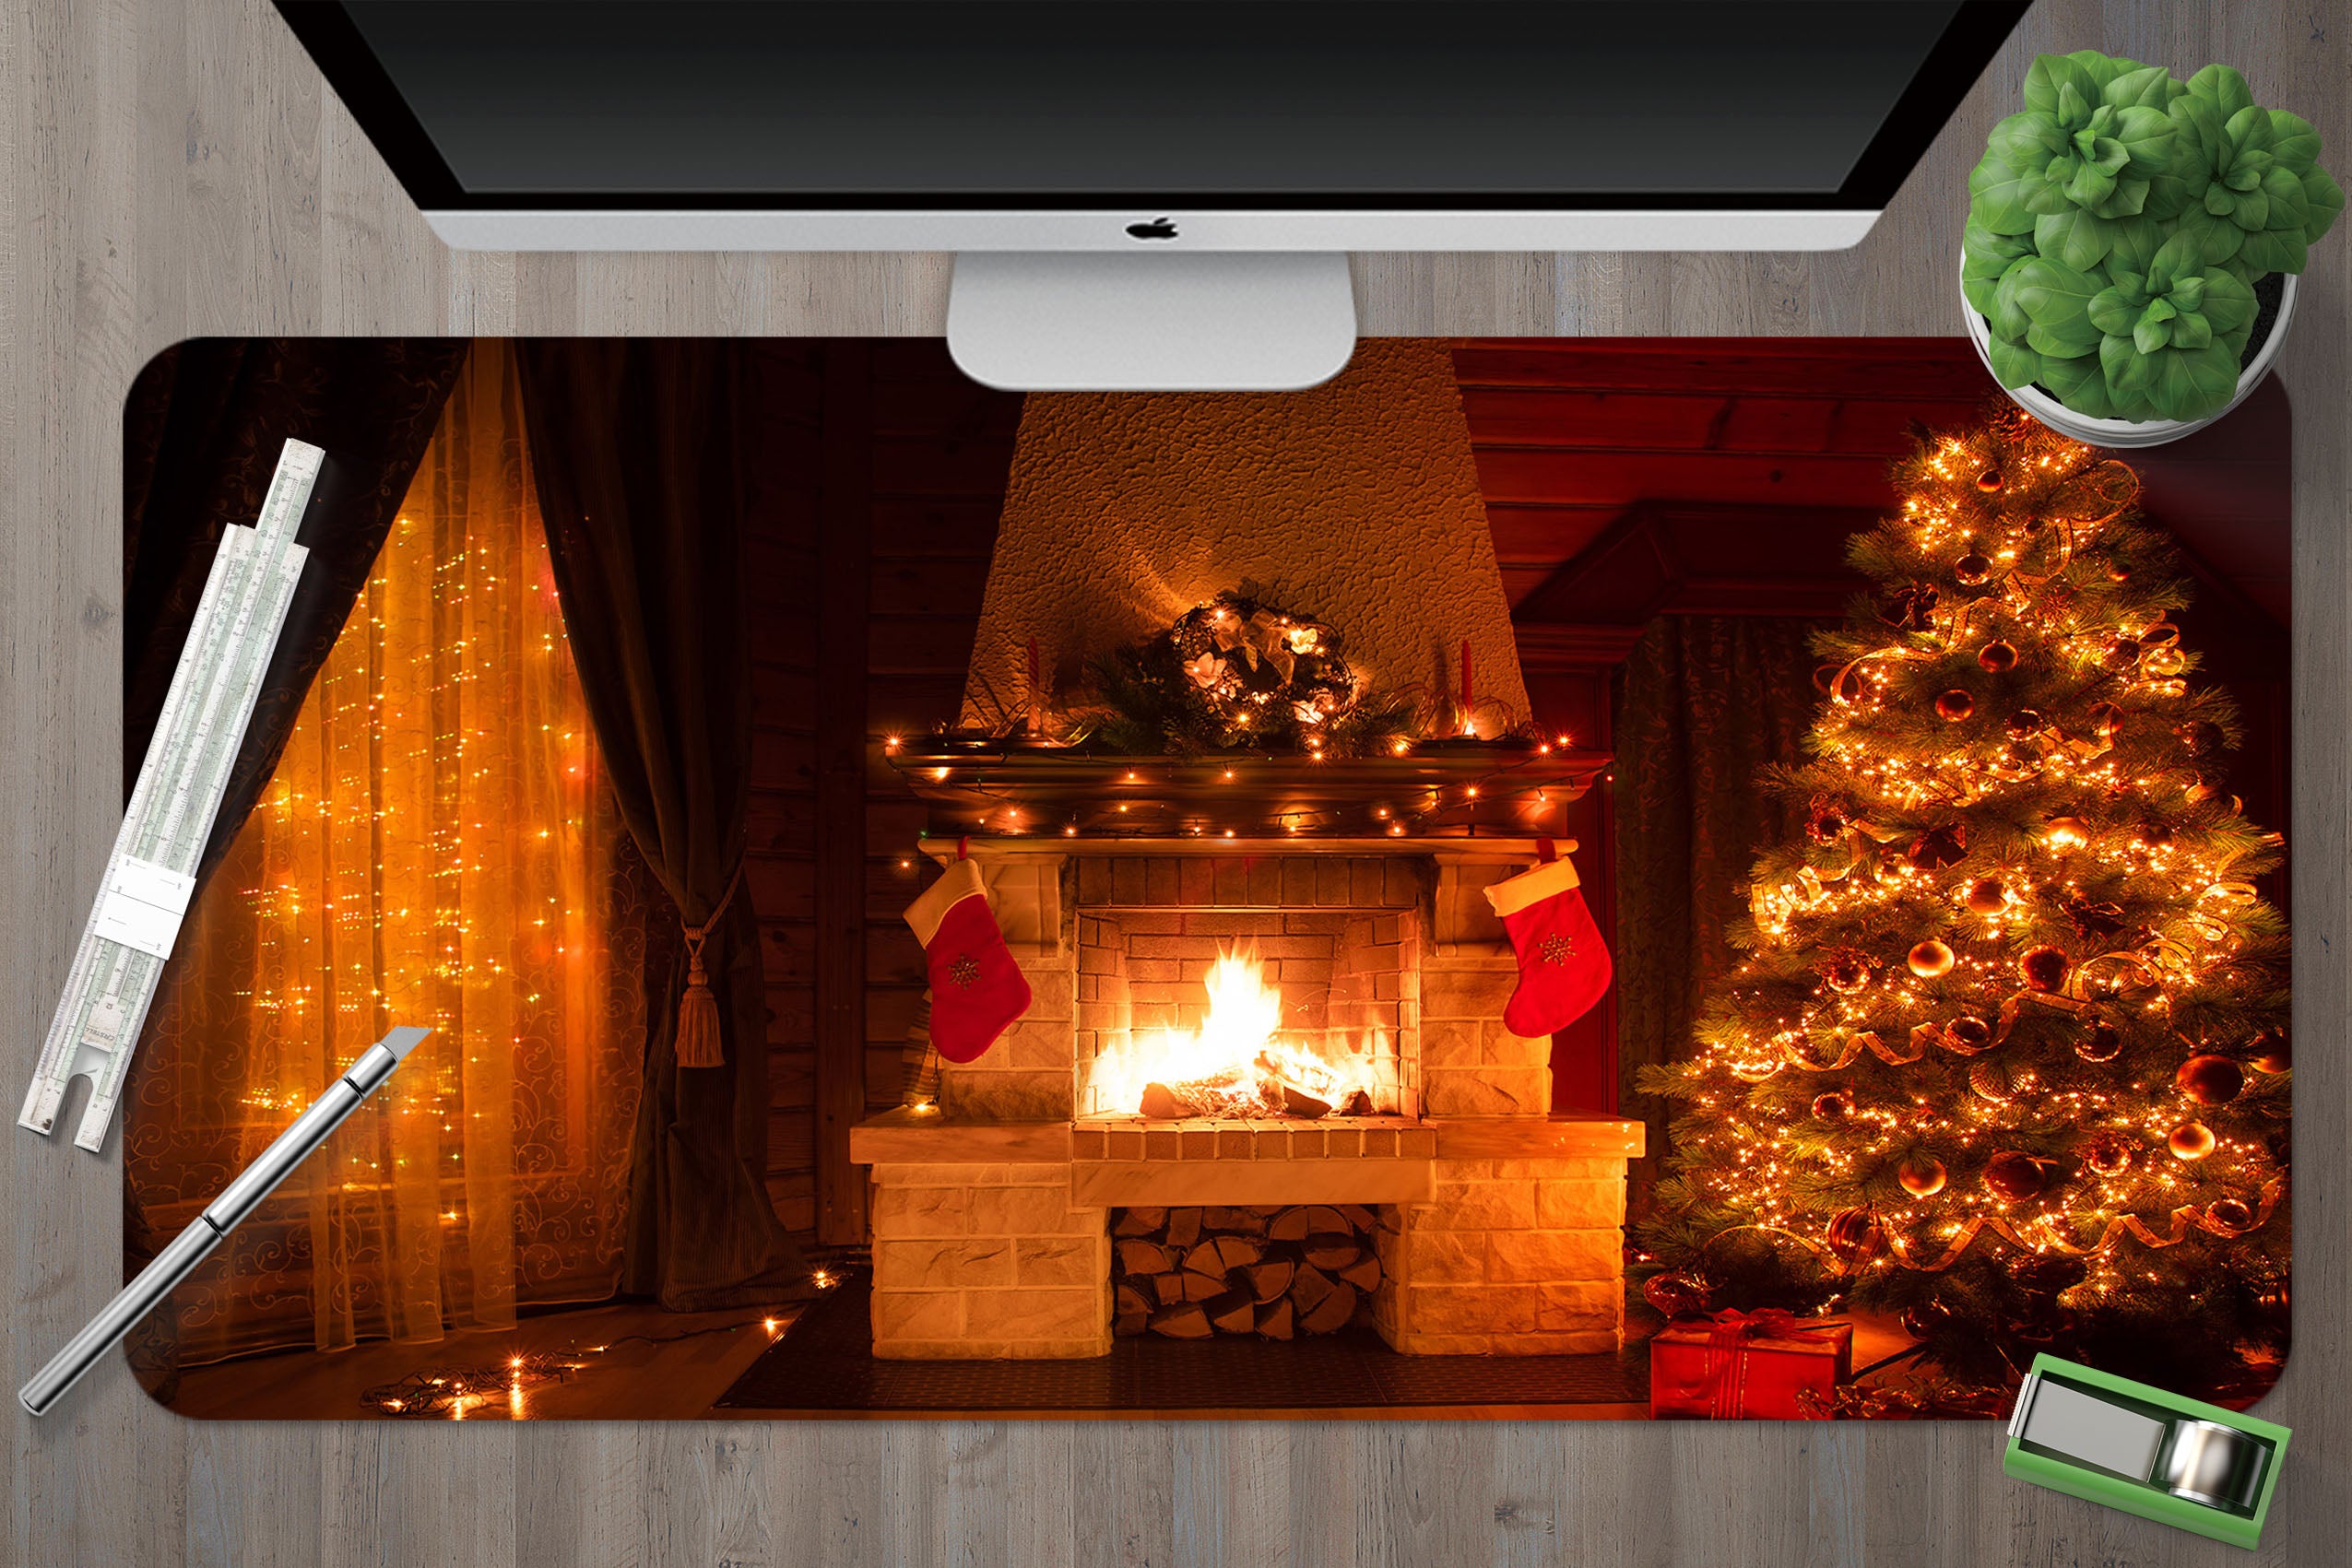 3D Fireplace 53240 Christmas Desk Mat Xmas